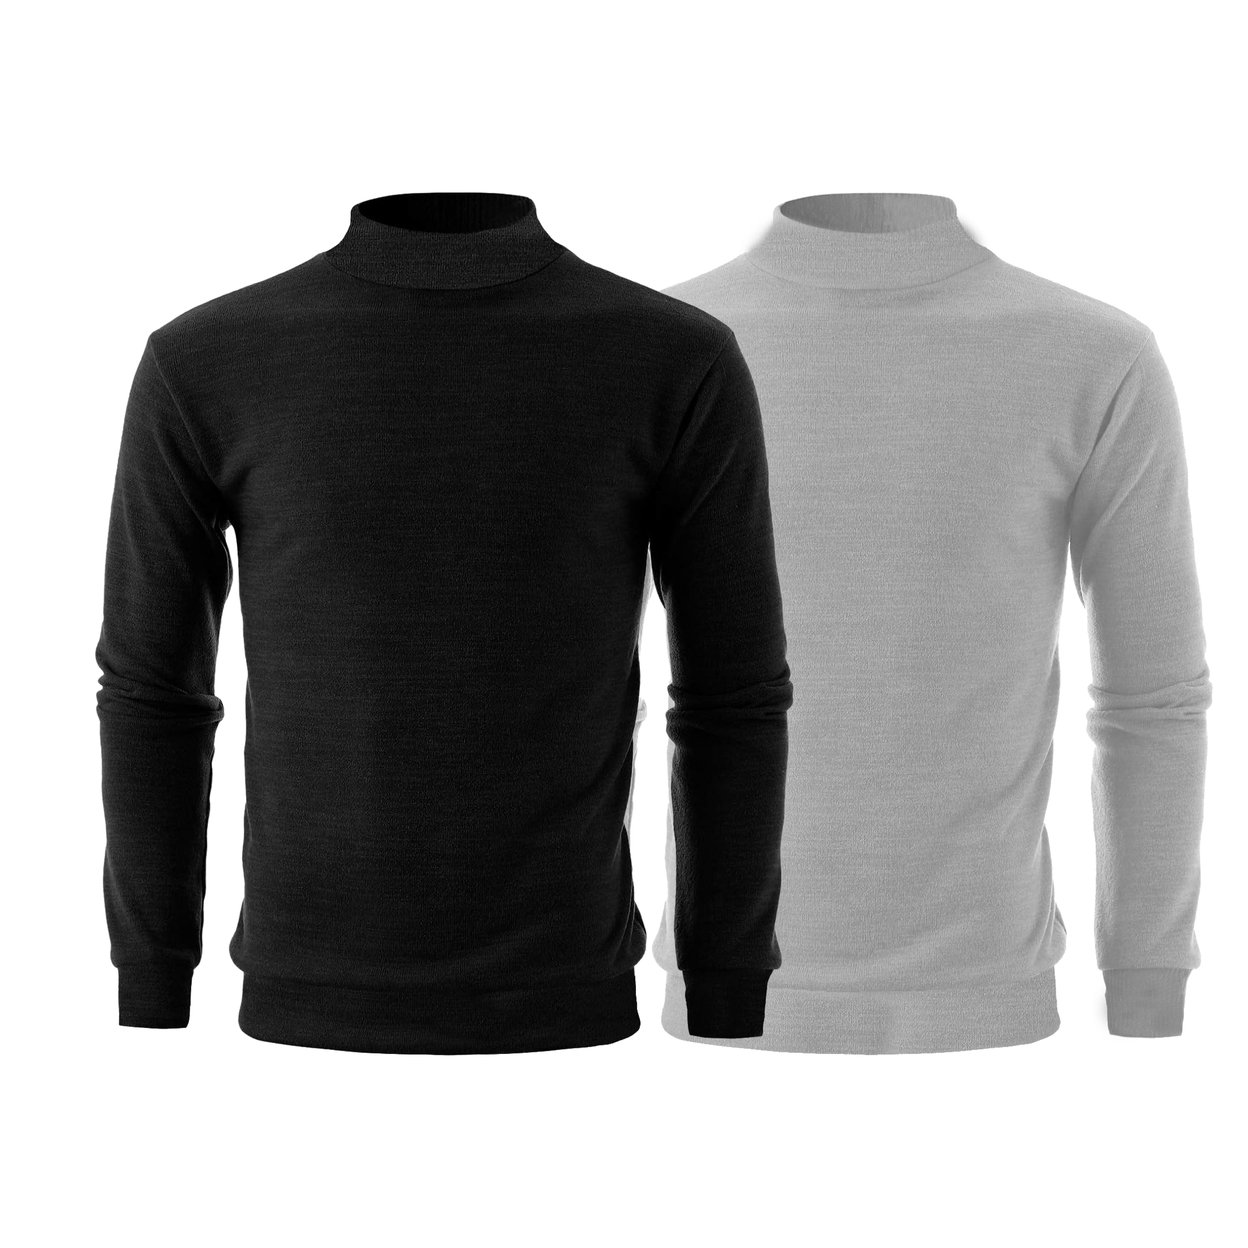 2-Pack: Men's Winter Warm Cozy Knit Slim Fit Mock Neck Sweater - Black &grey, Medium